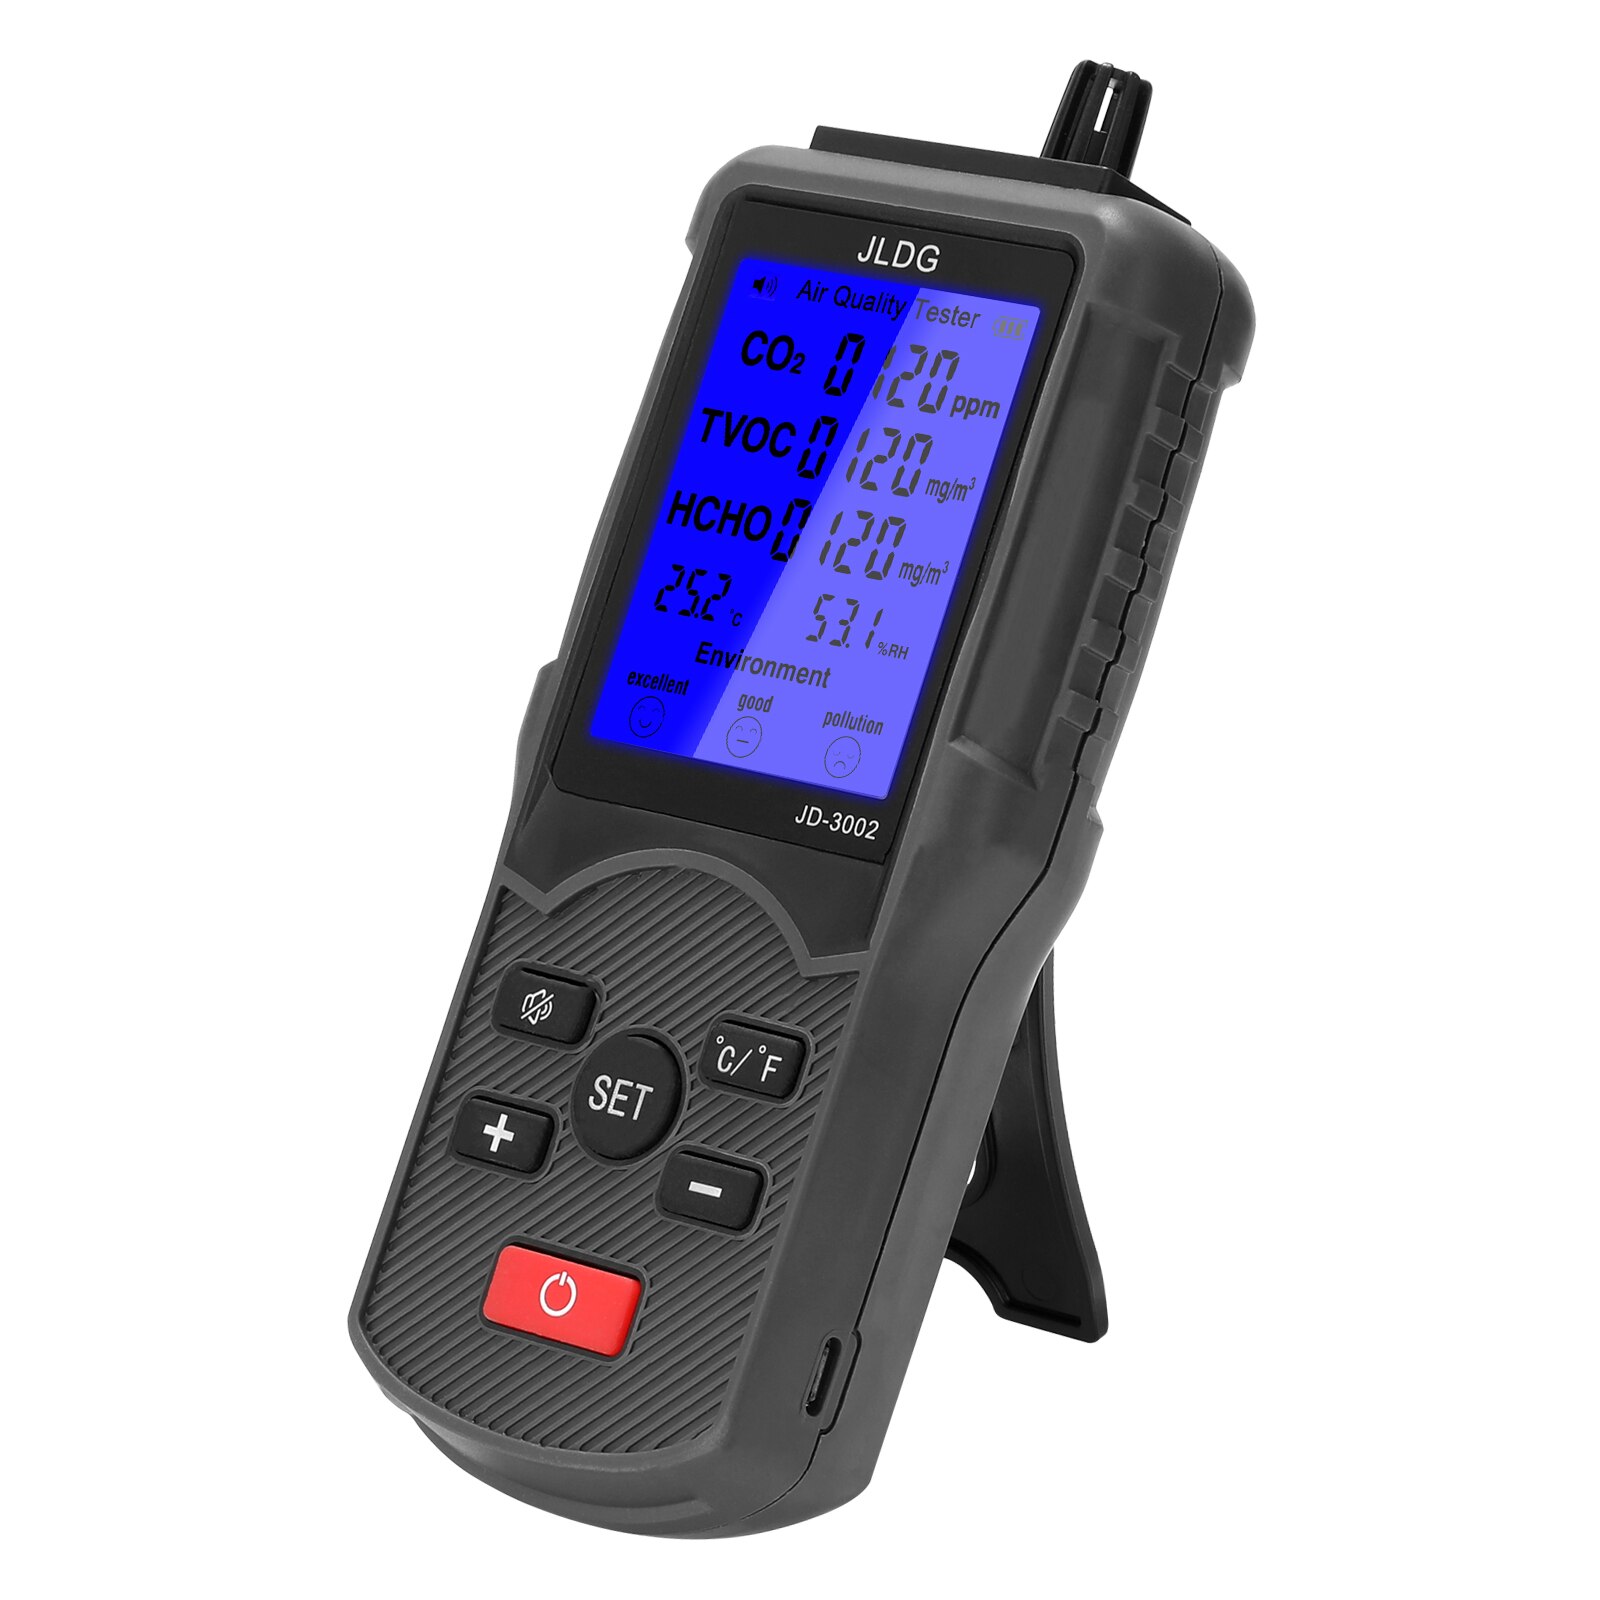 JD-3002 CO2 Meter Multifunctional Air Monitor TVOC Meter Temperature Humidity Measuring Device Gas Detector Sensor